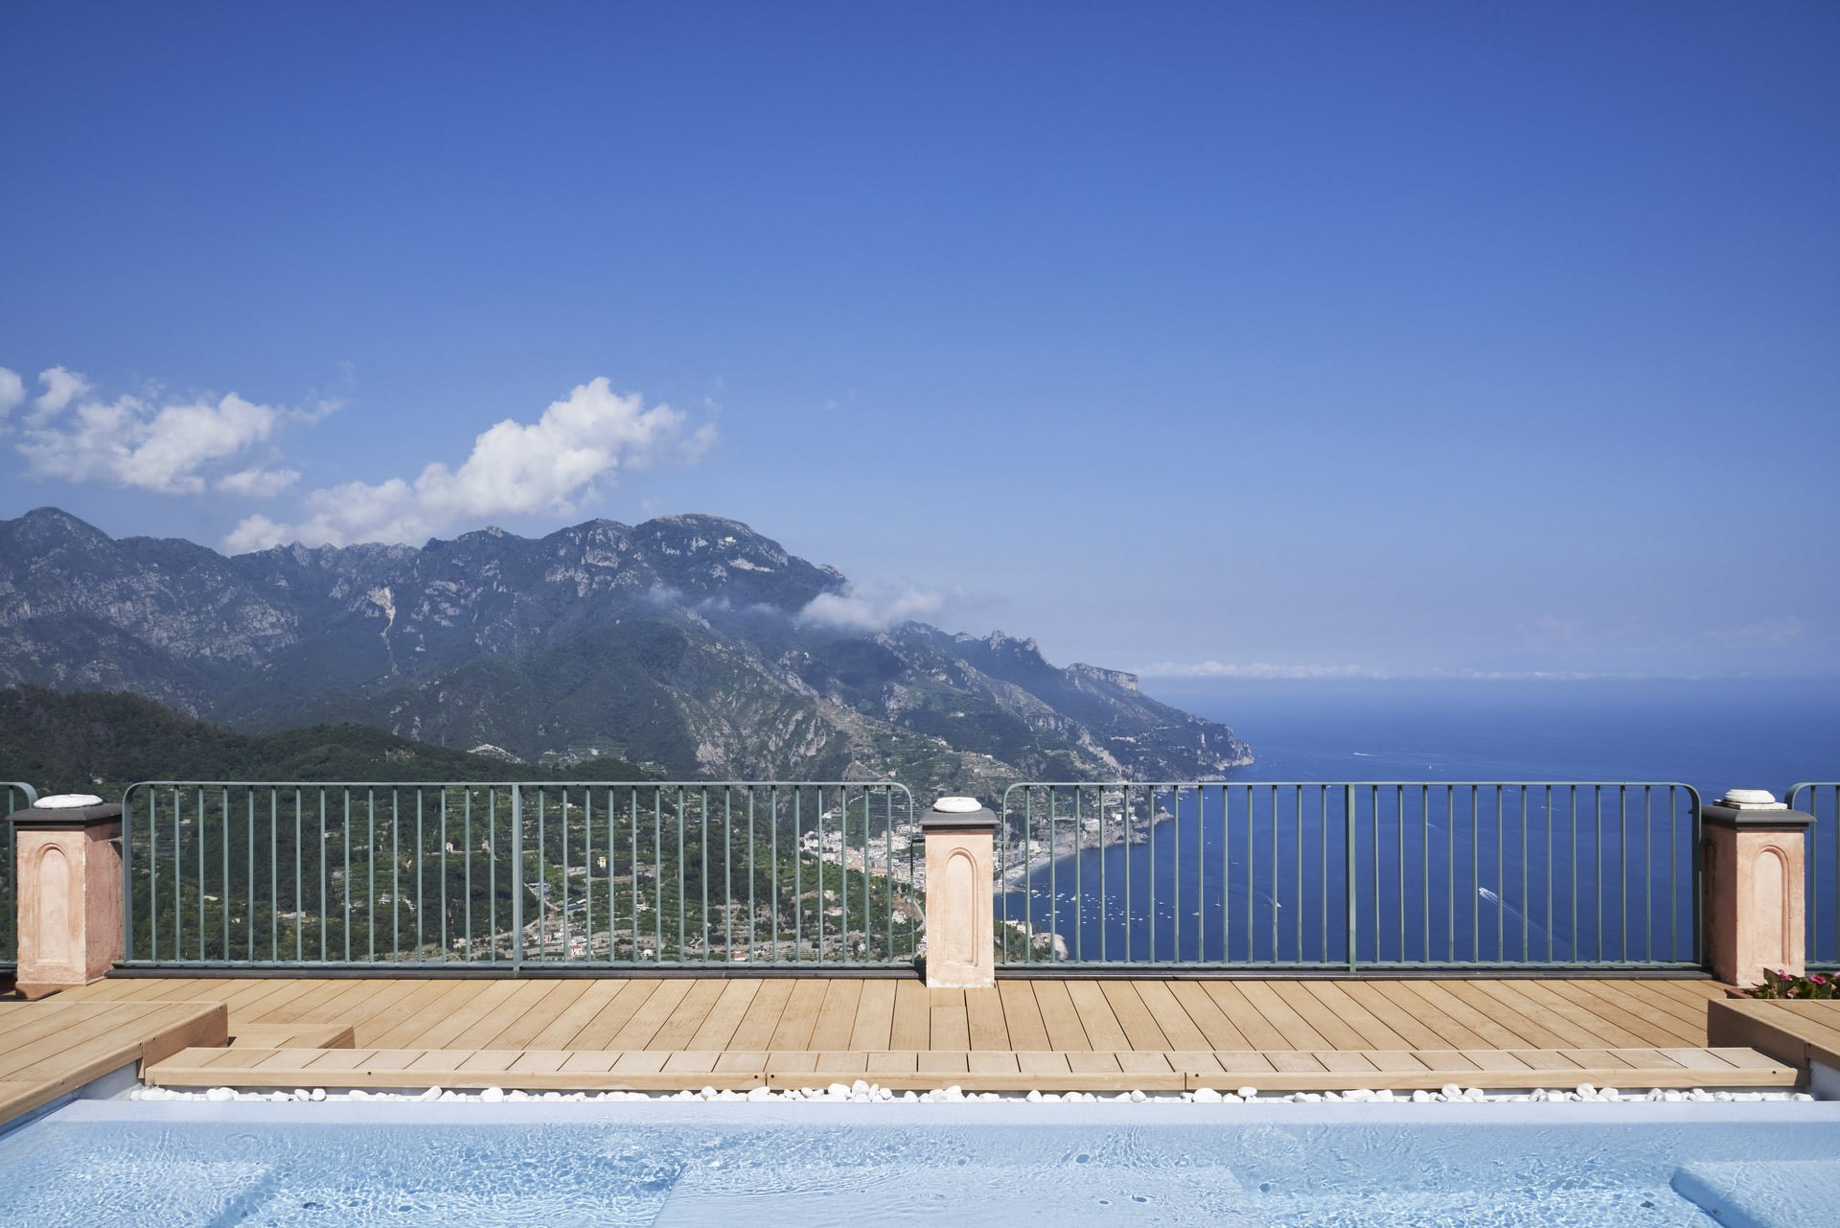 Palazzo Avino Hotel - Amalfi Coast, Ravello, Italy - Pool View